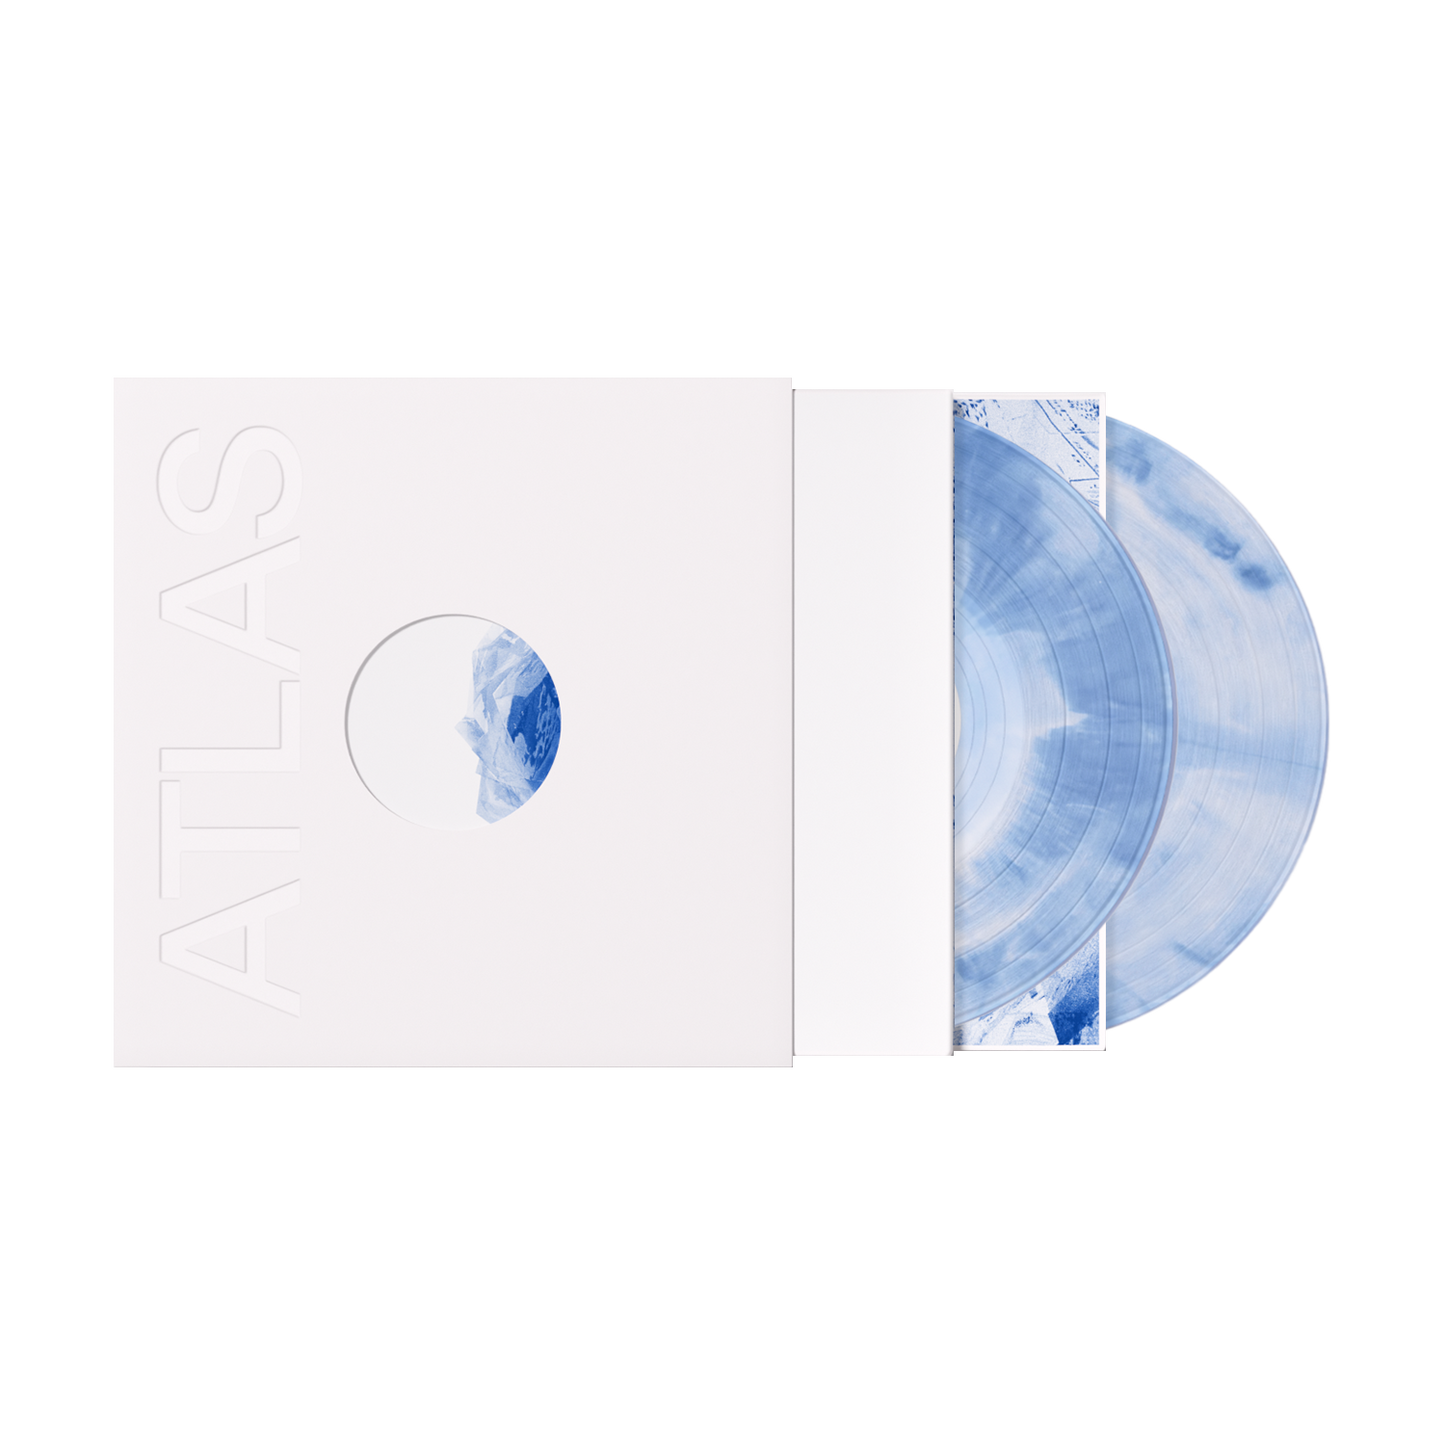 Atlas 10 Year Anniversary Limited Edition Box Set